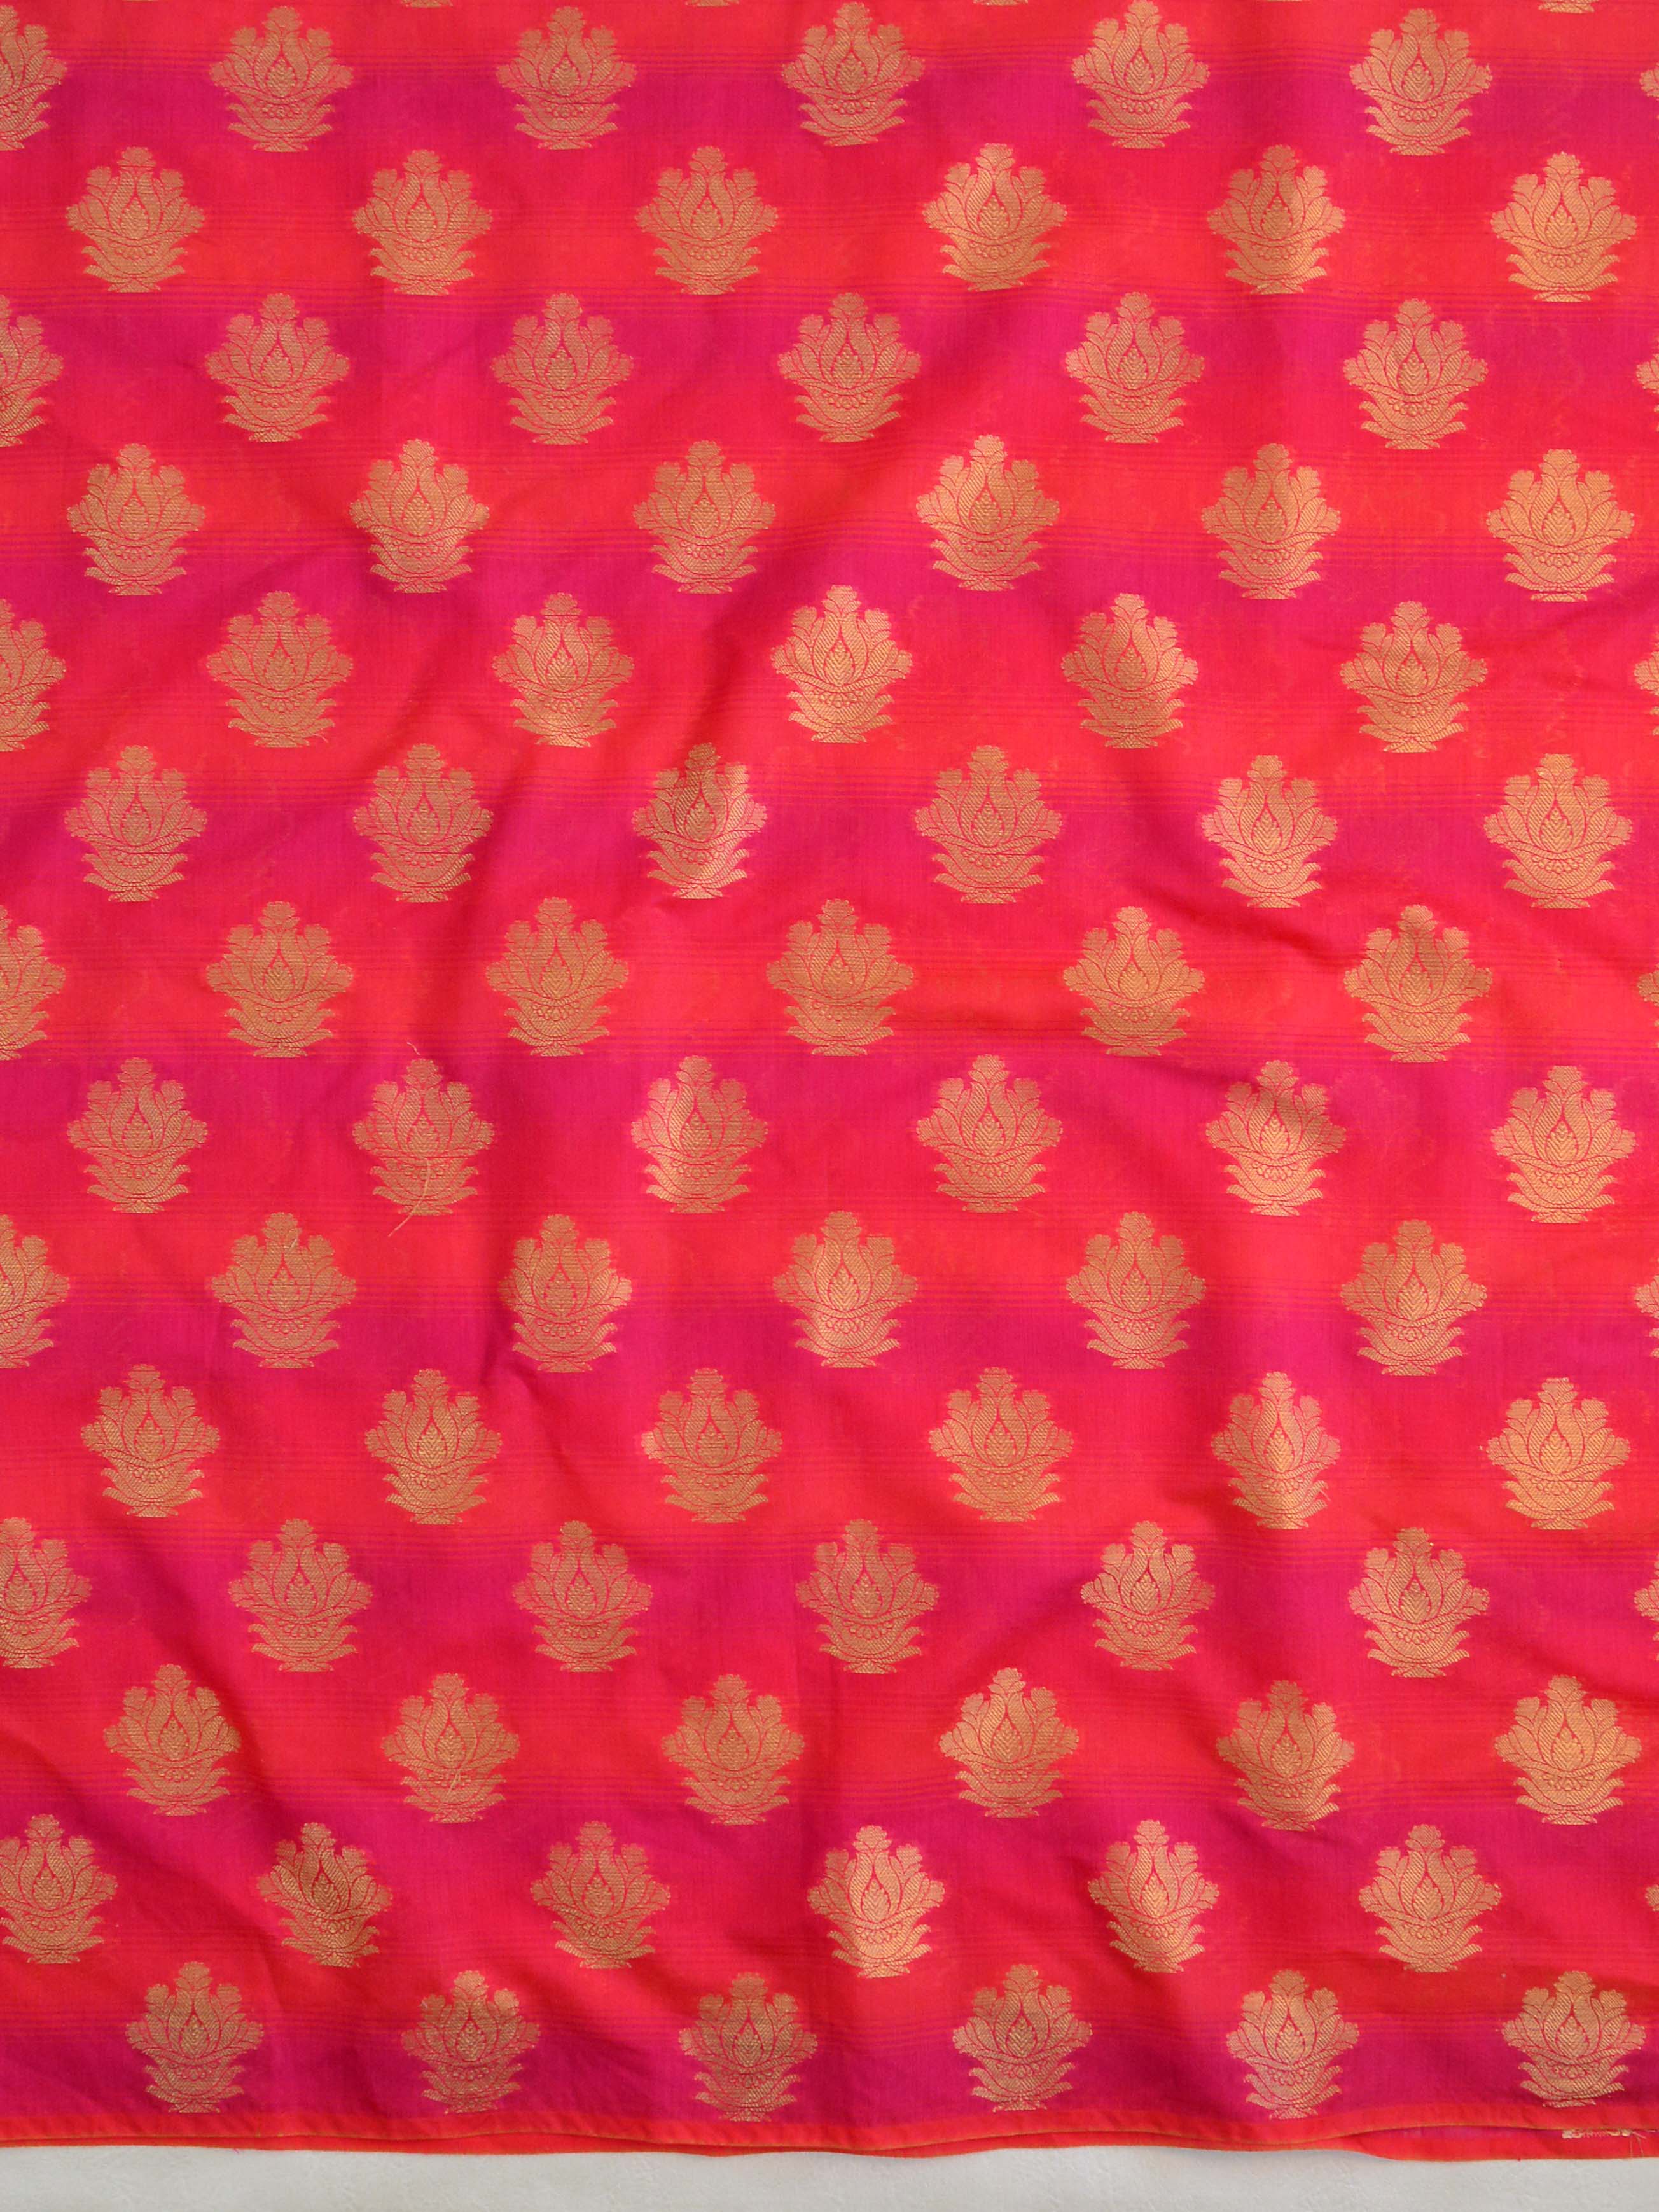 Banarasee Chanderi Cotton Stripes Salwar Kameez Fabric With Dupatta-Pink